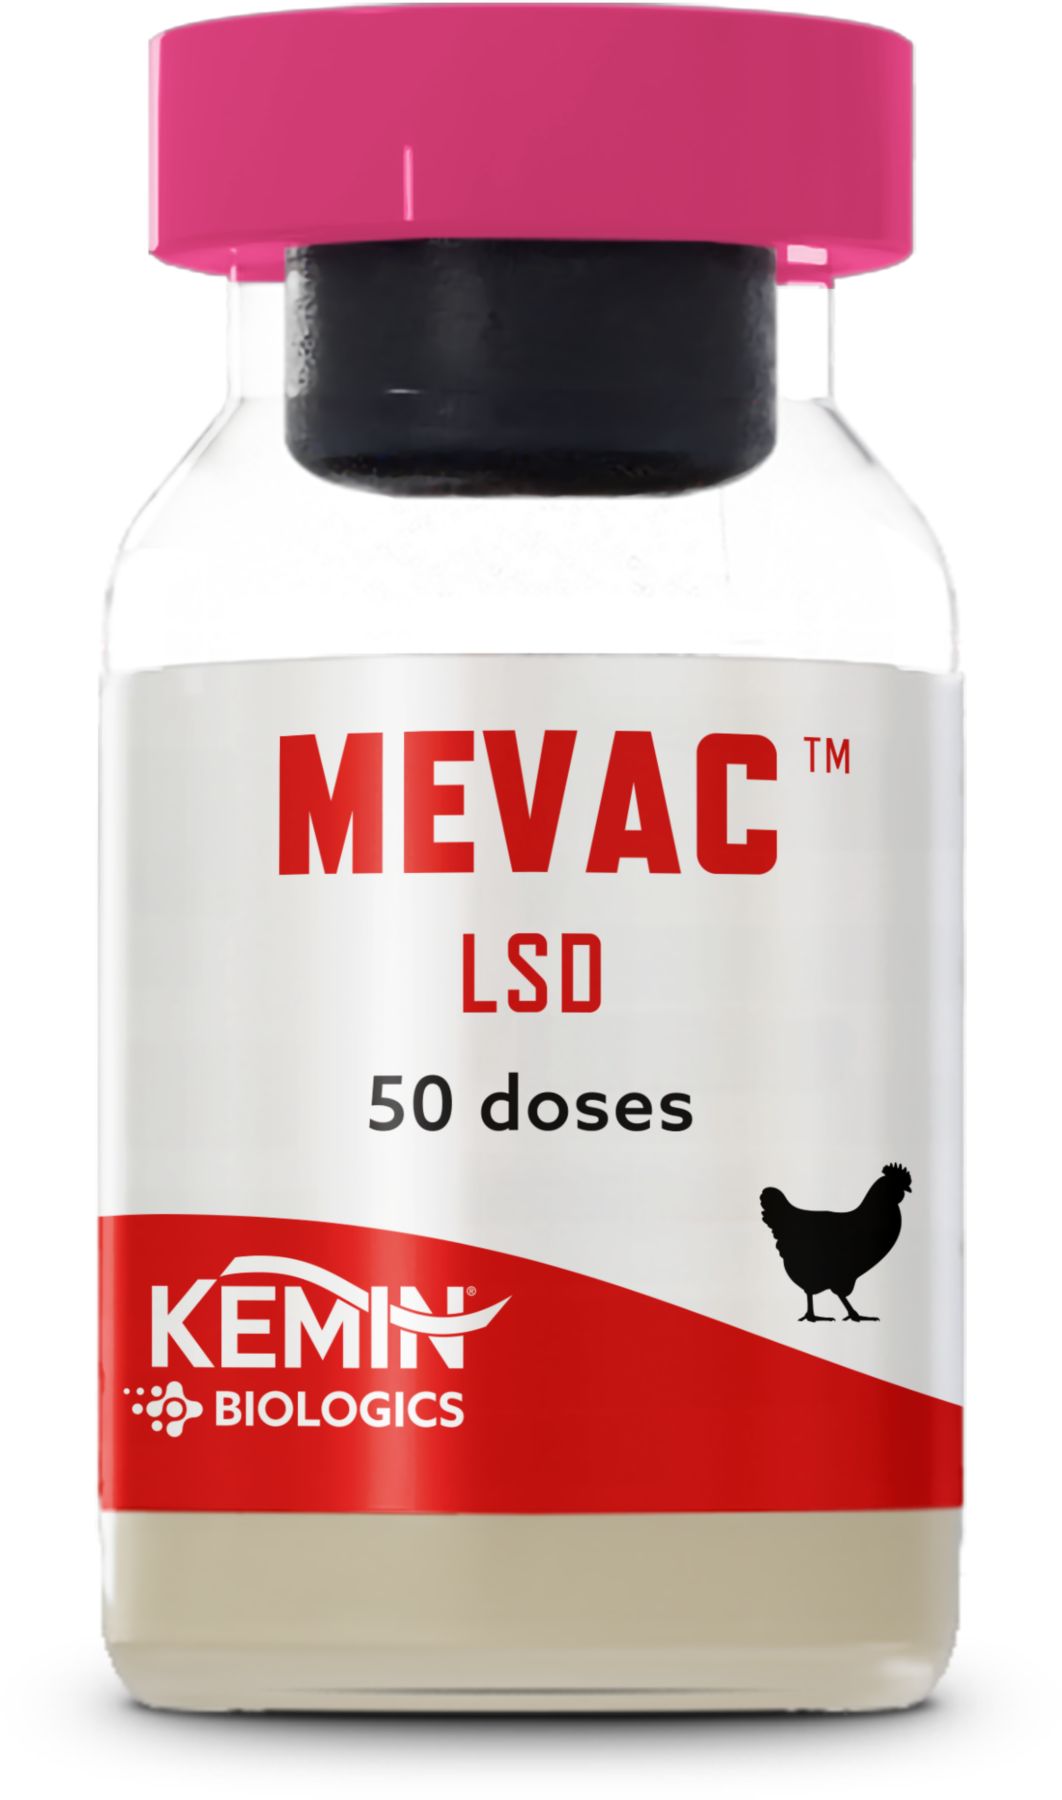 MEVAC LSD small label mockup